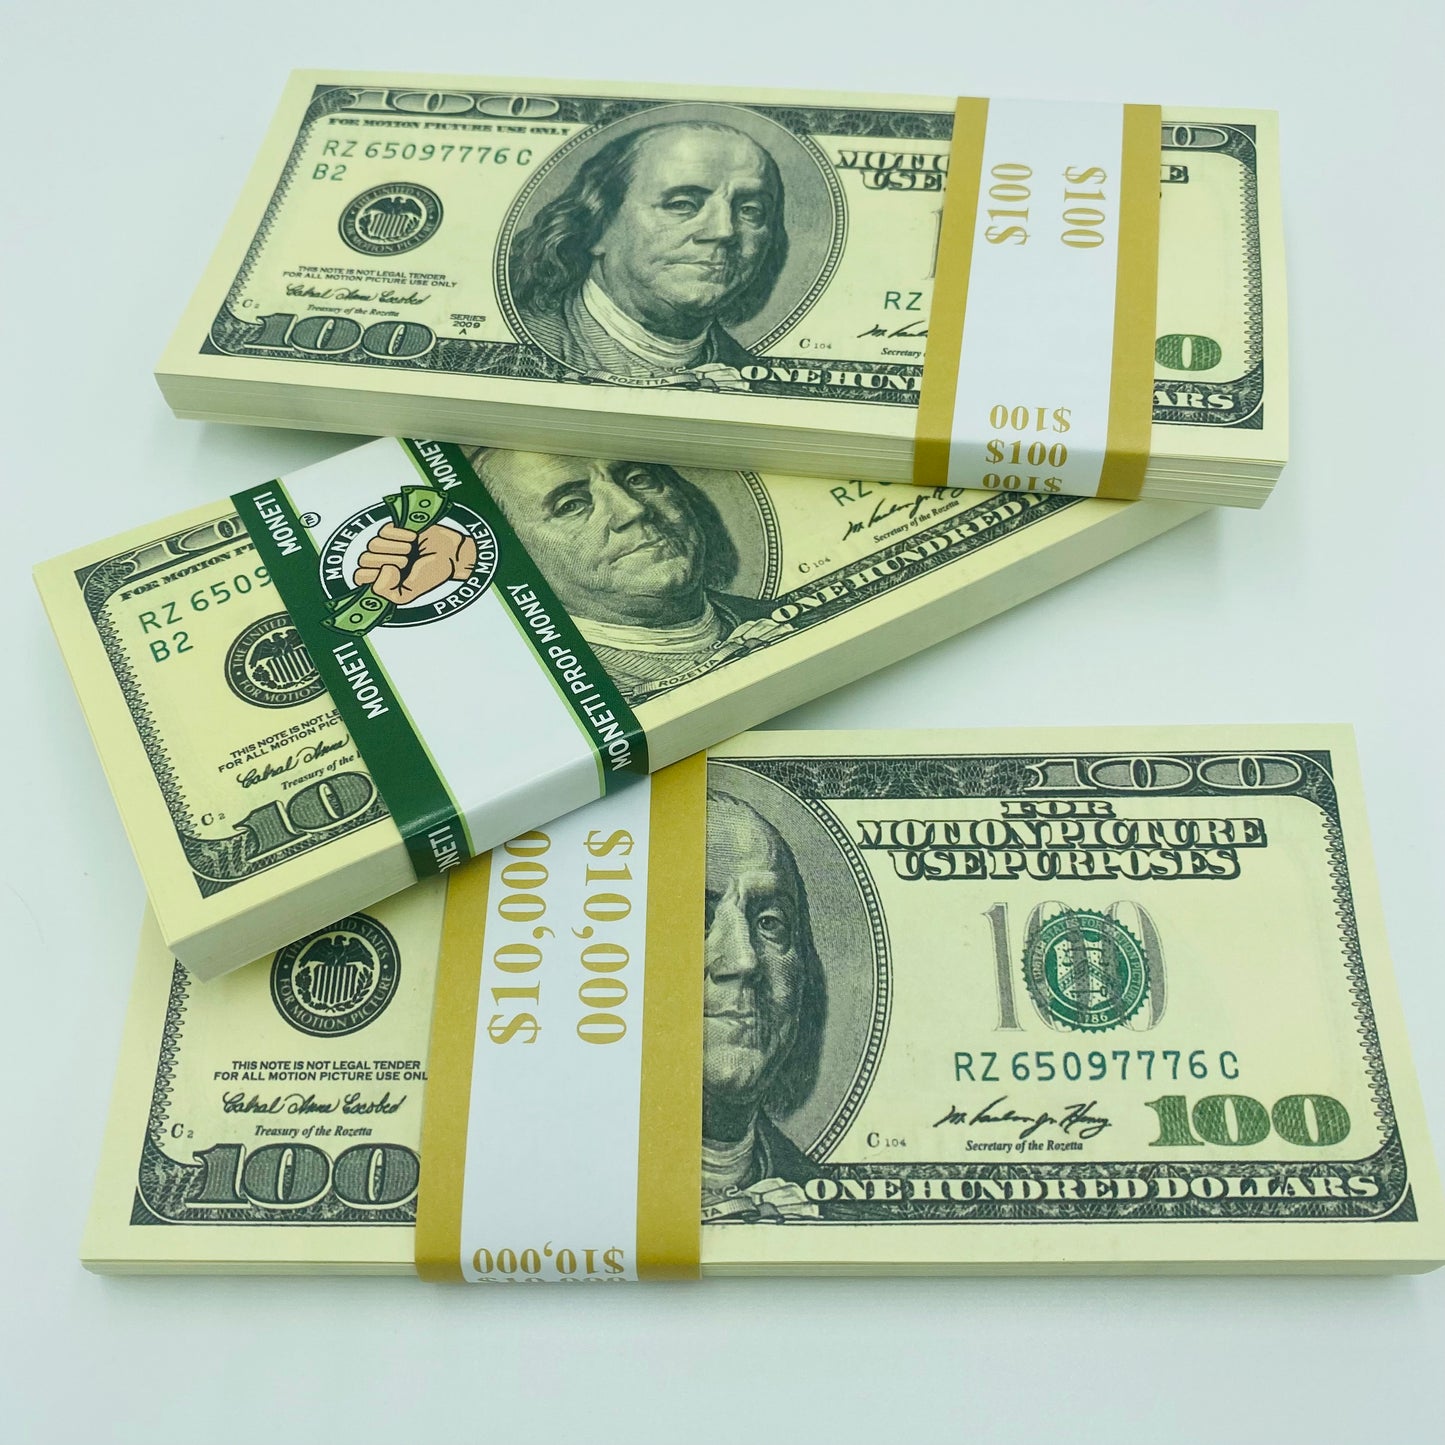 Old US Dollar Prop Money 100 pcs $100 Fake Money 2 Side Looks Real